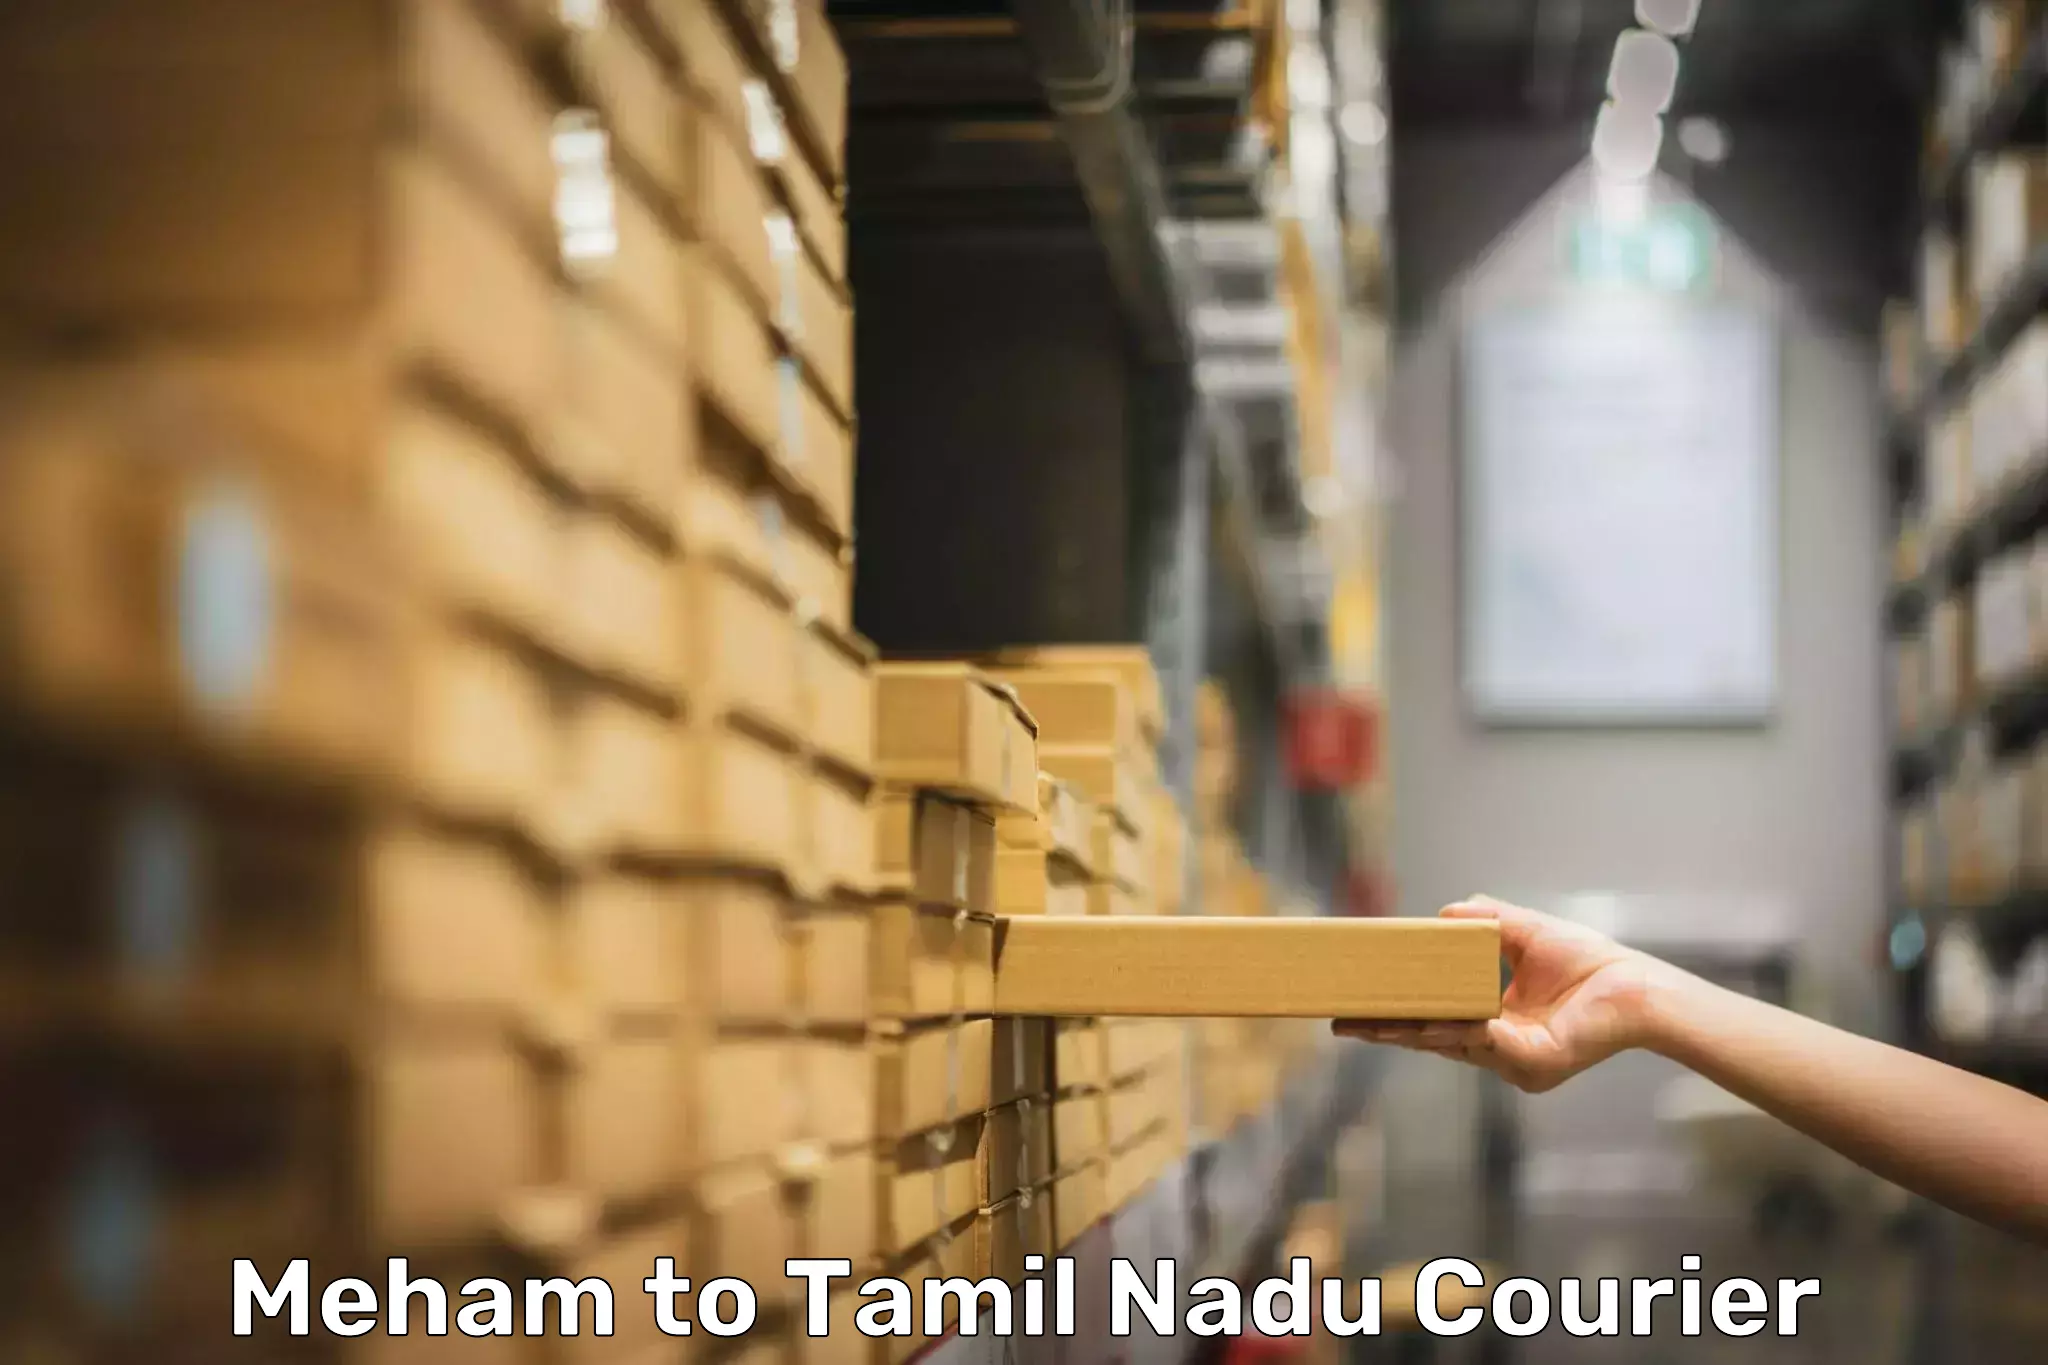 Baggage relocation service Meham to Tamil Nadu